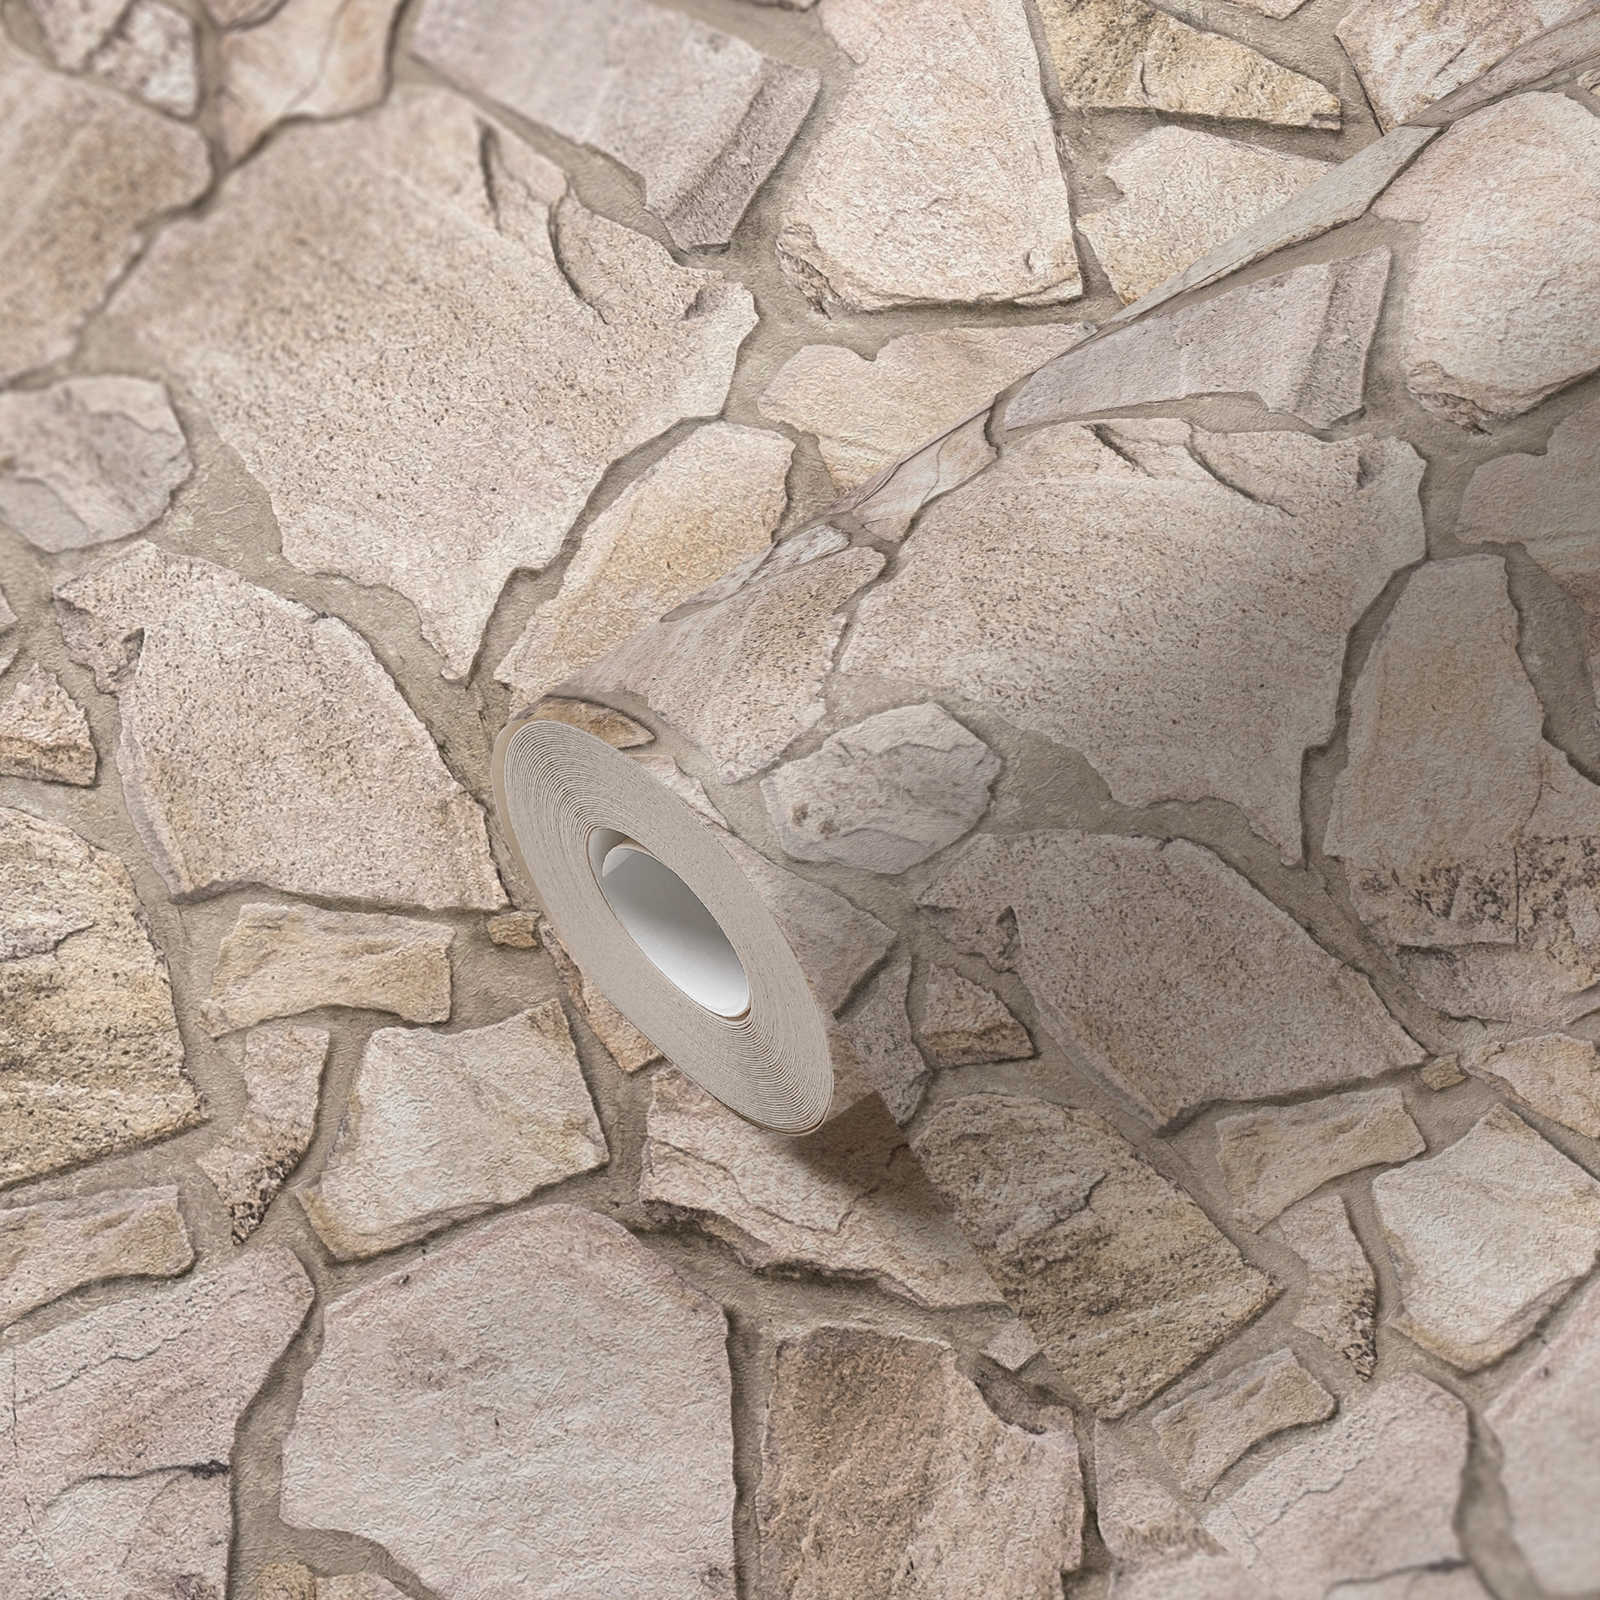             Non-woven wallpaper in stone look with 3D brickwork - beige, grey, brown
        